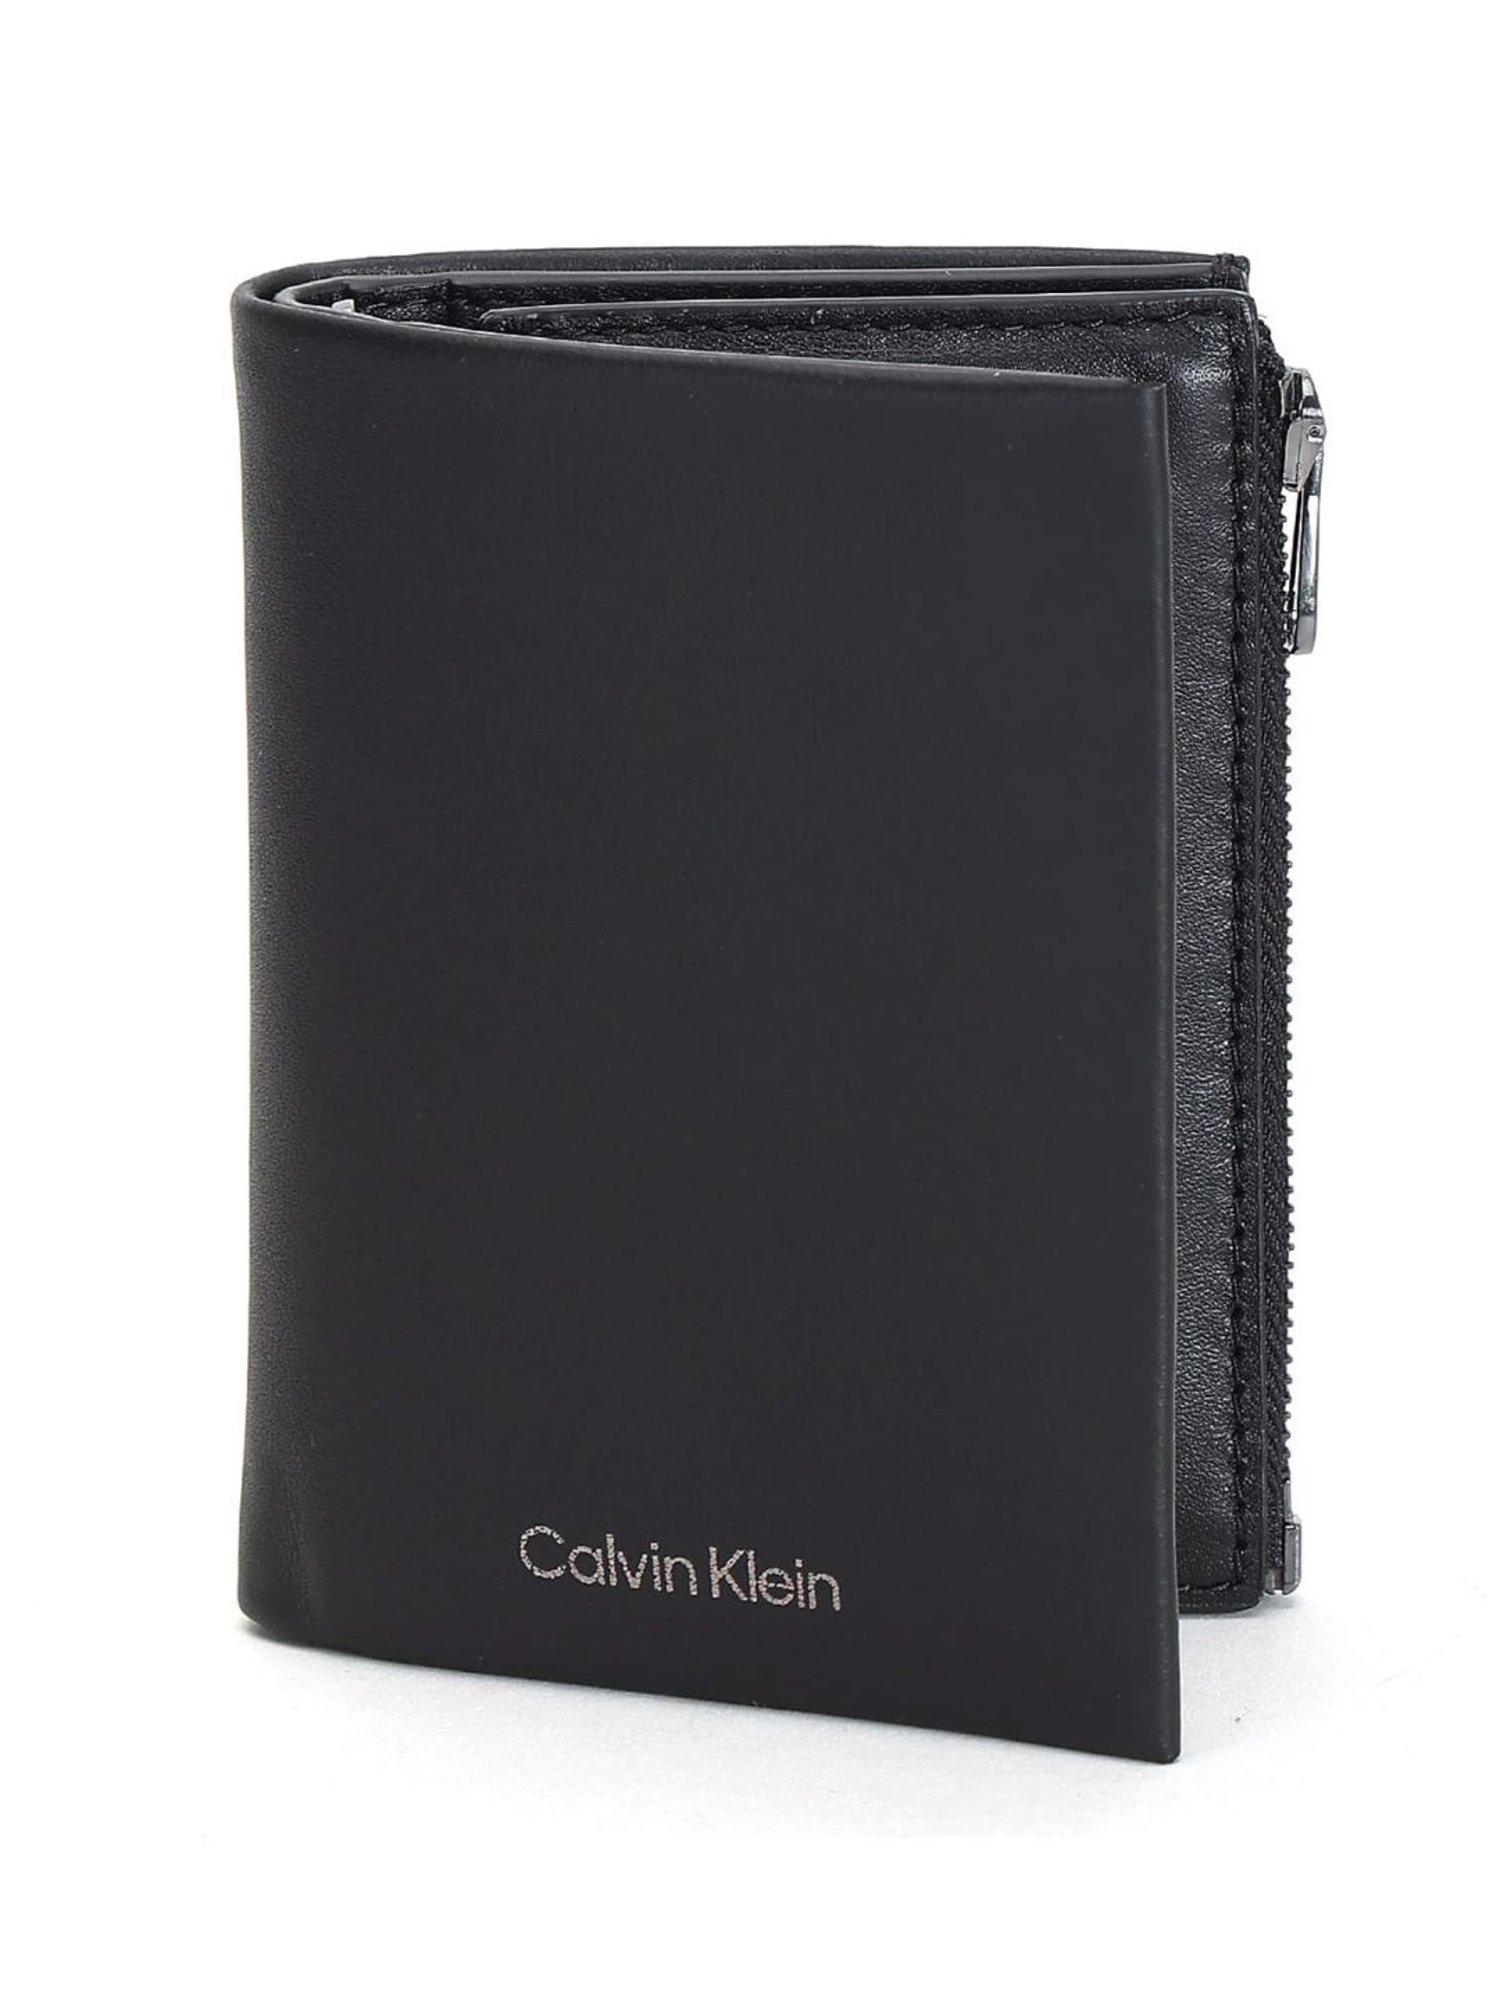 CALVIN KLEIN Leather Cardholder in Black | Endource